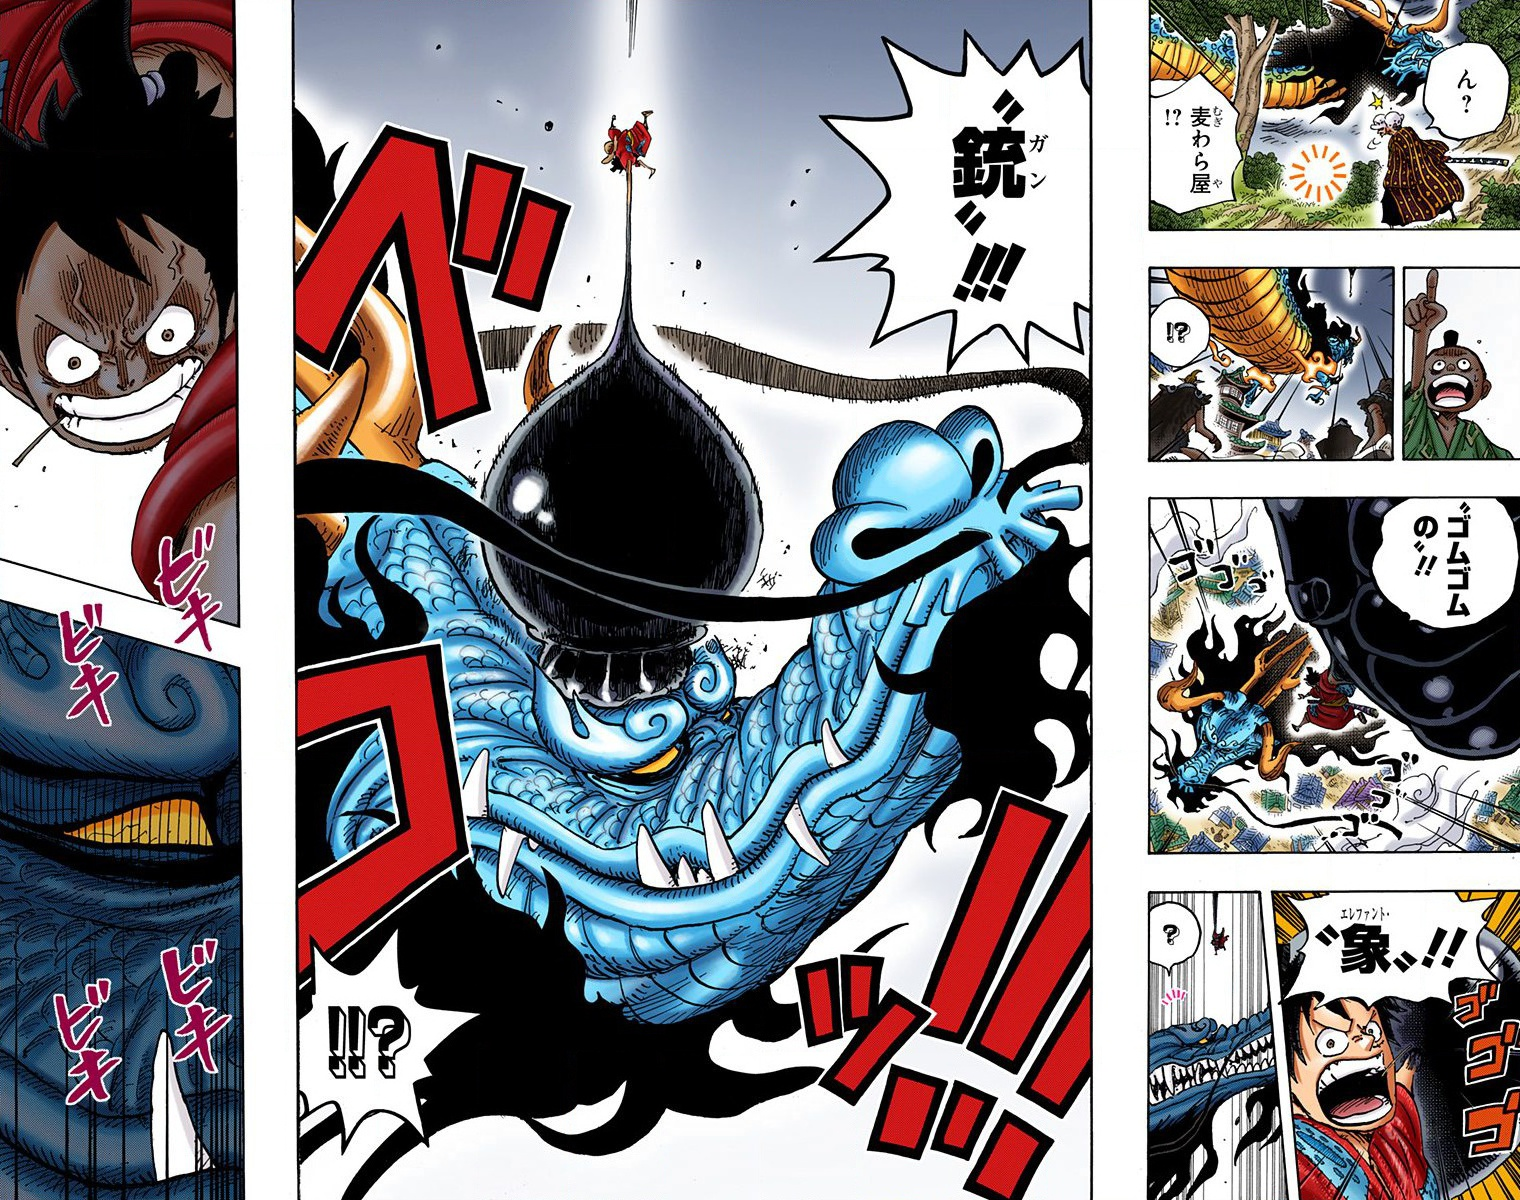 One Piece Full Color Volumes 87 90 91 92 Next 16th September In Japan Worstgen